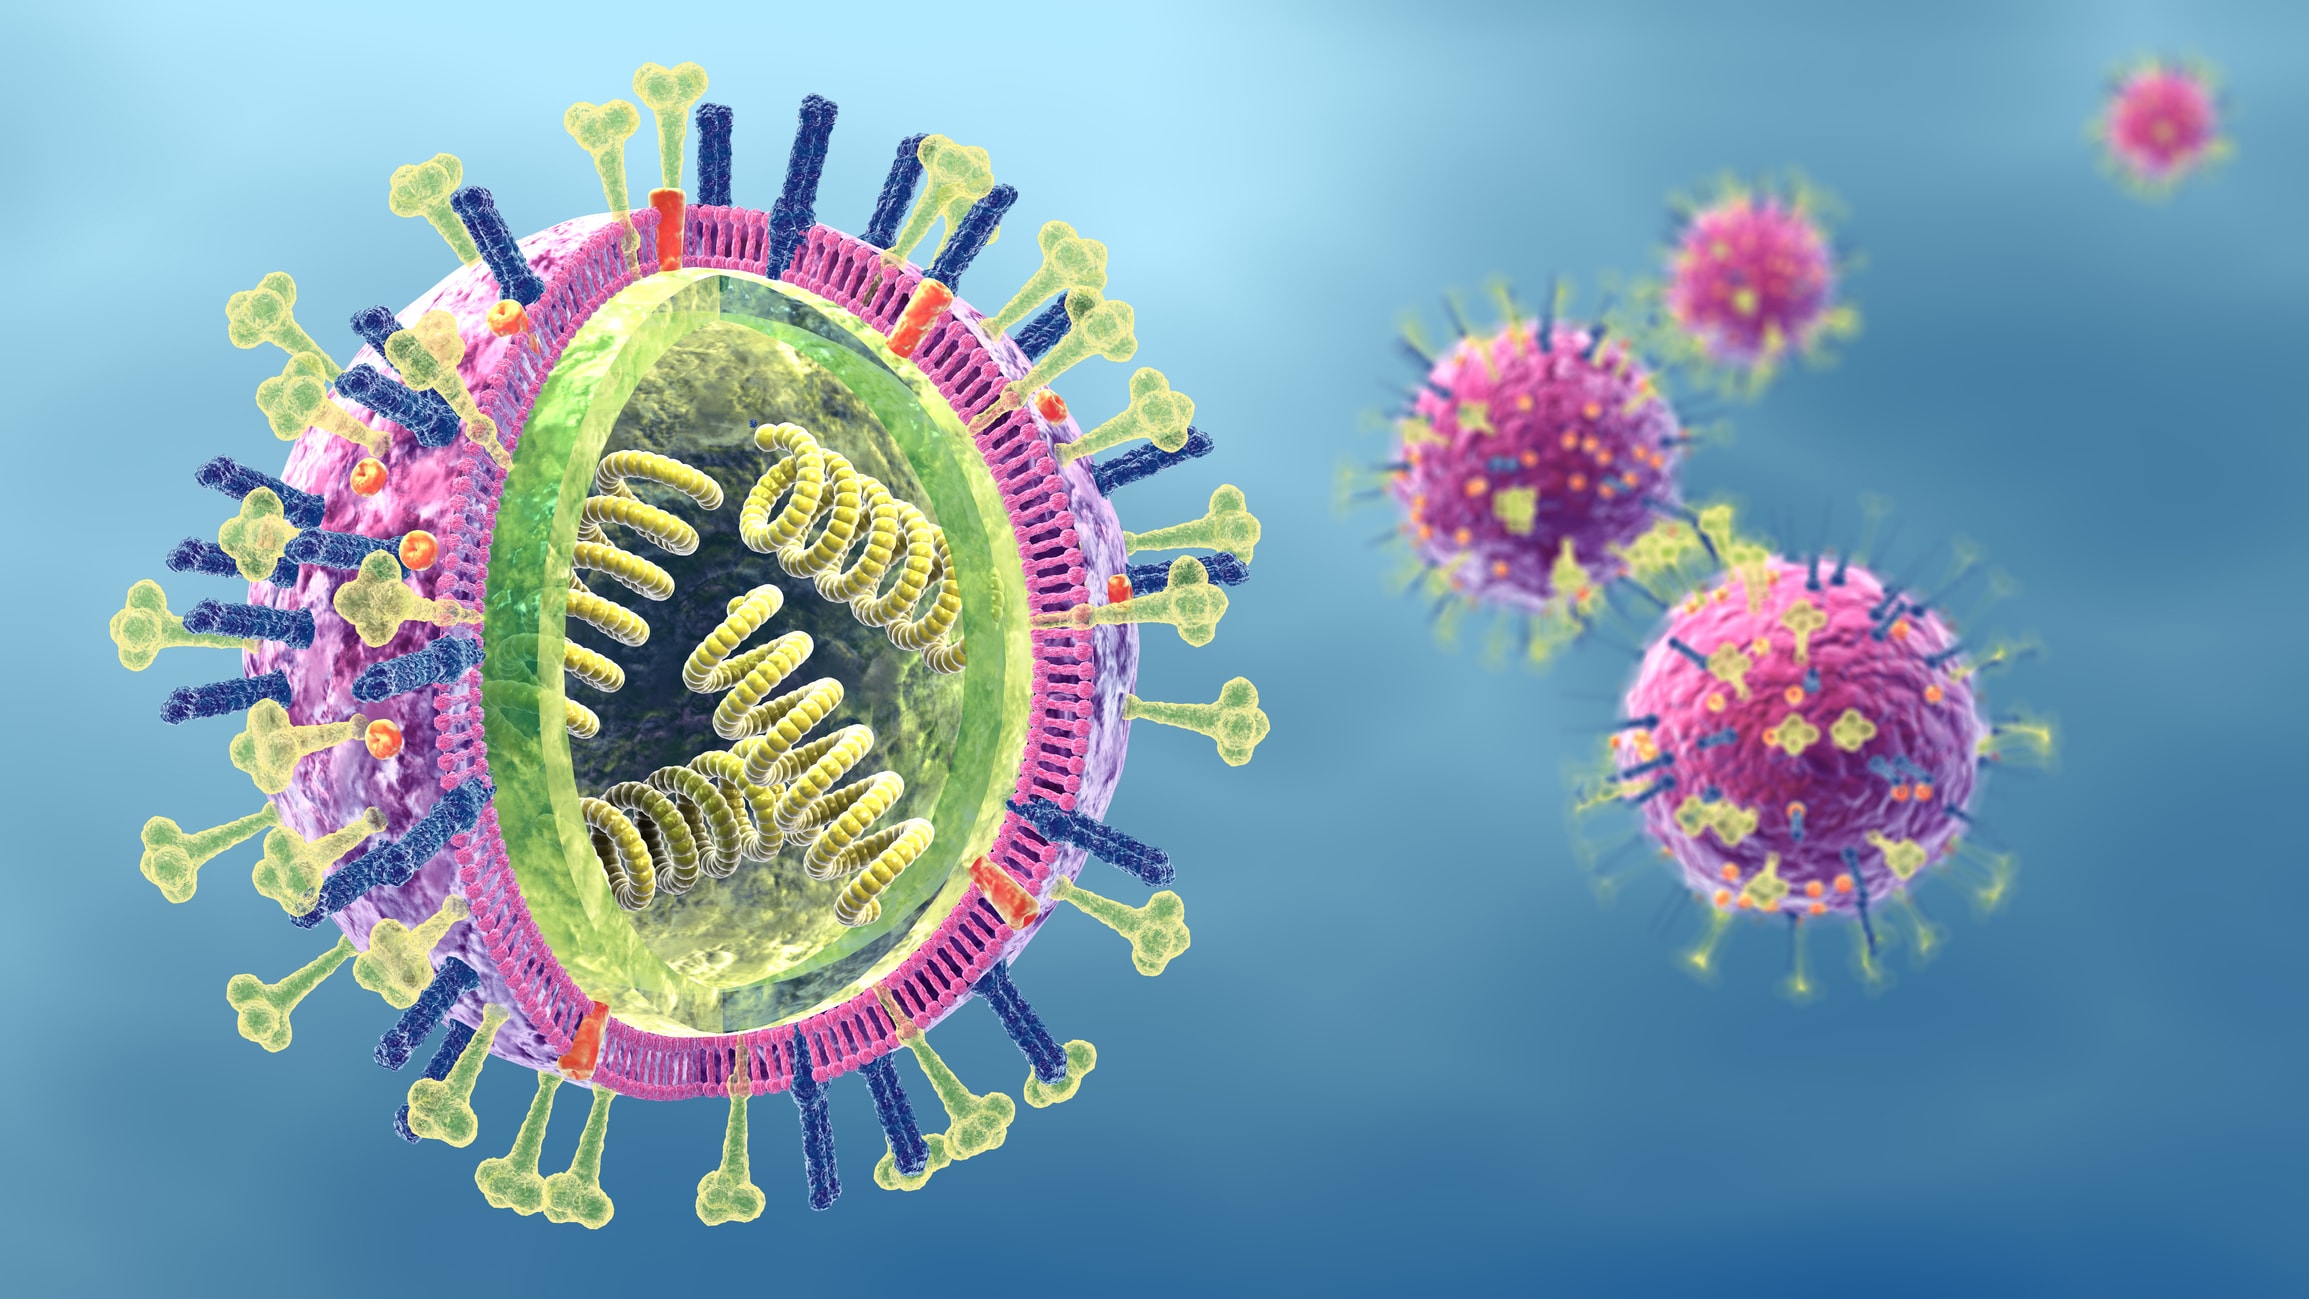 Рнк вирус гриппа а. H6n1 вирус гриппа. Вирус influenza. Строение вируса. Макет вируса гриппа.